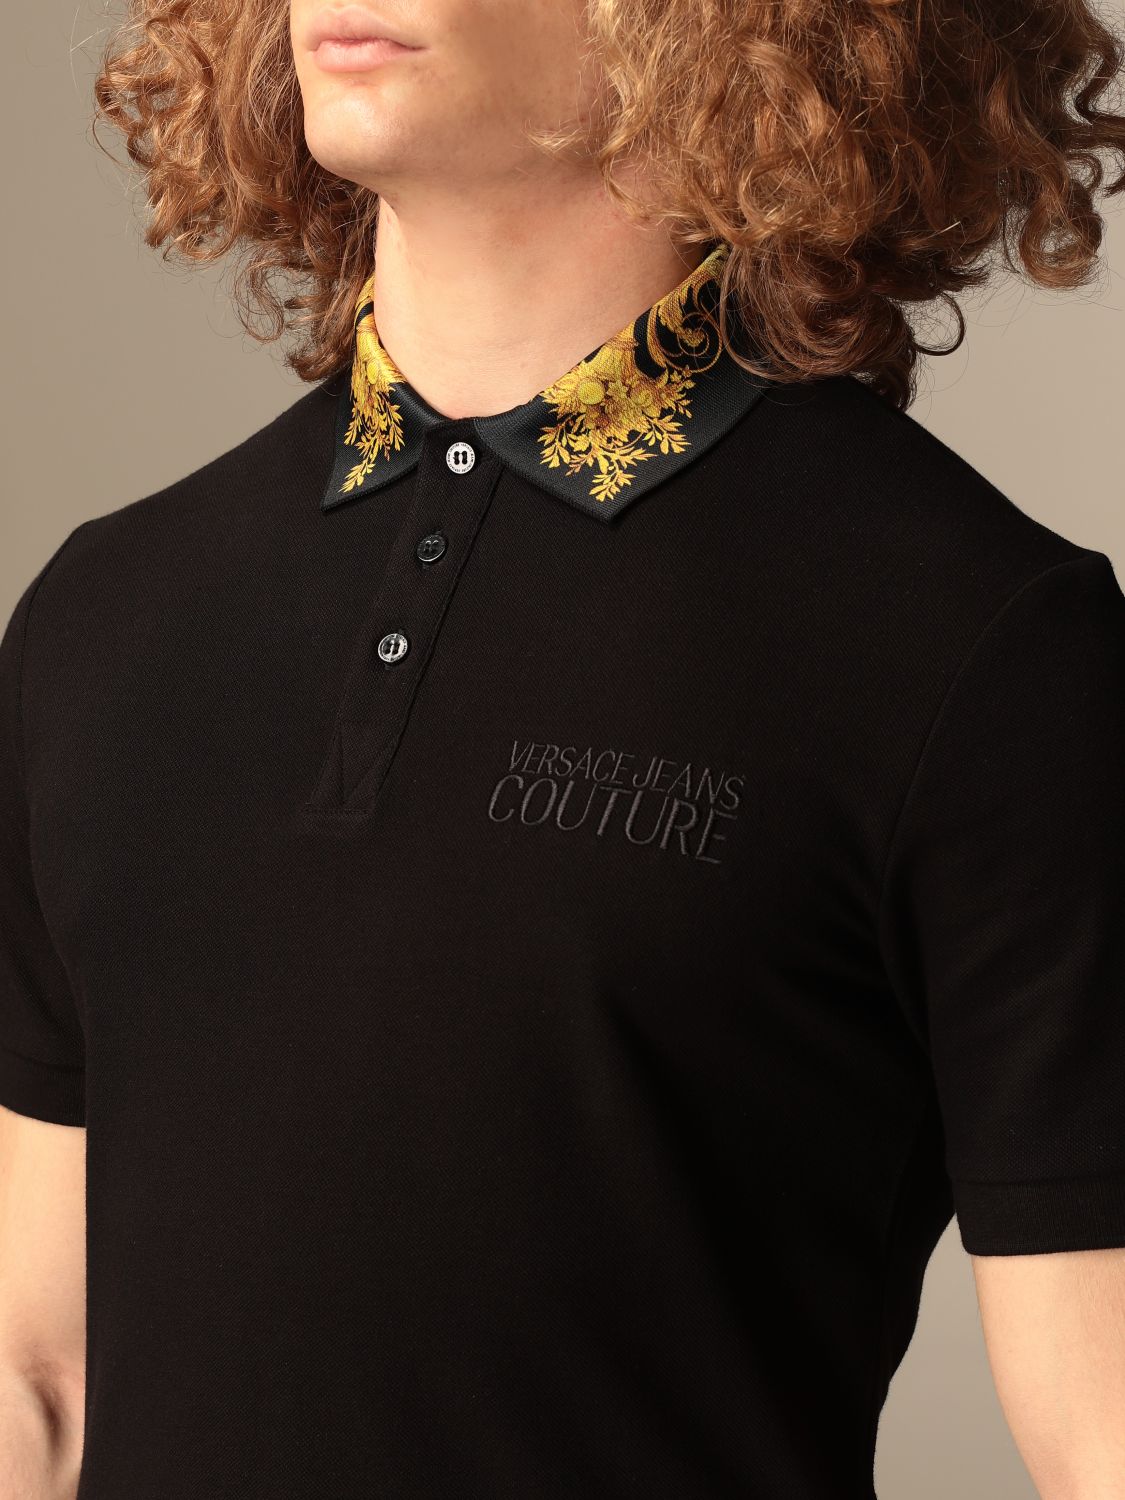 Versace Jeans Couture polo shirt in piqué cotton with baroque collar